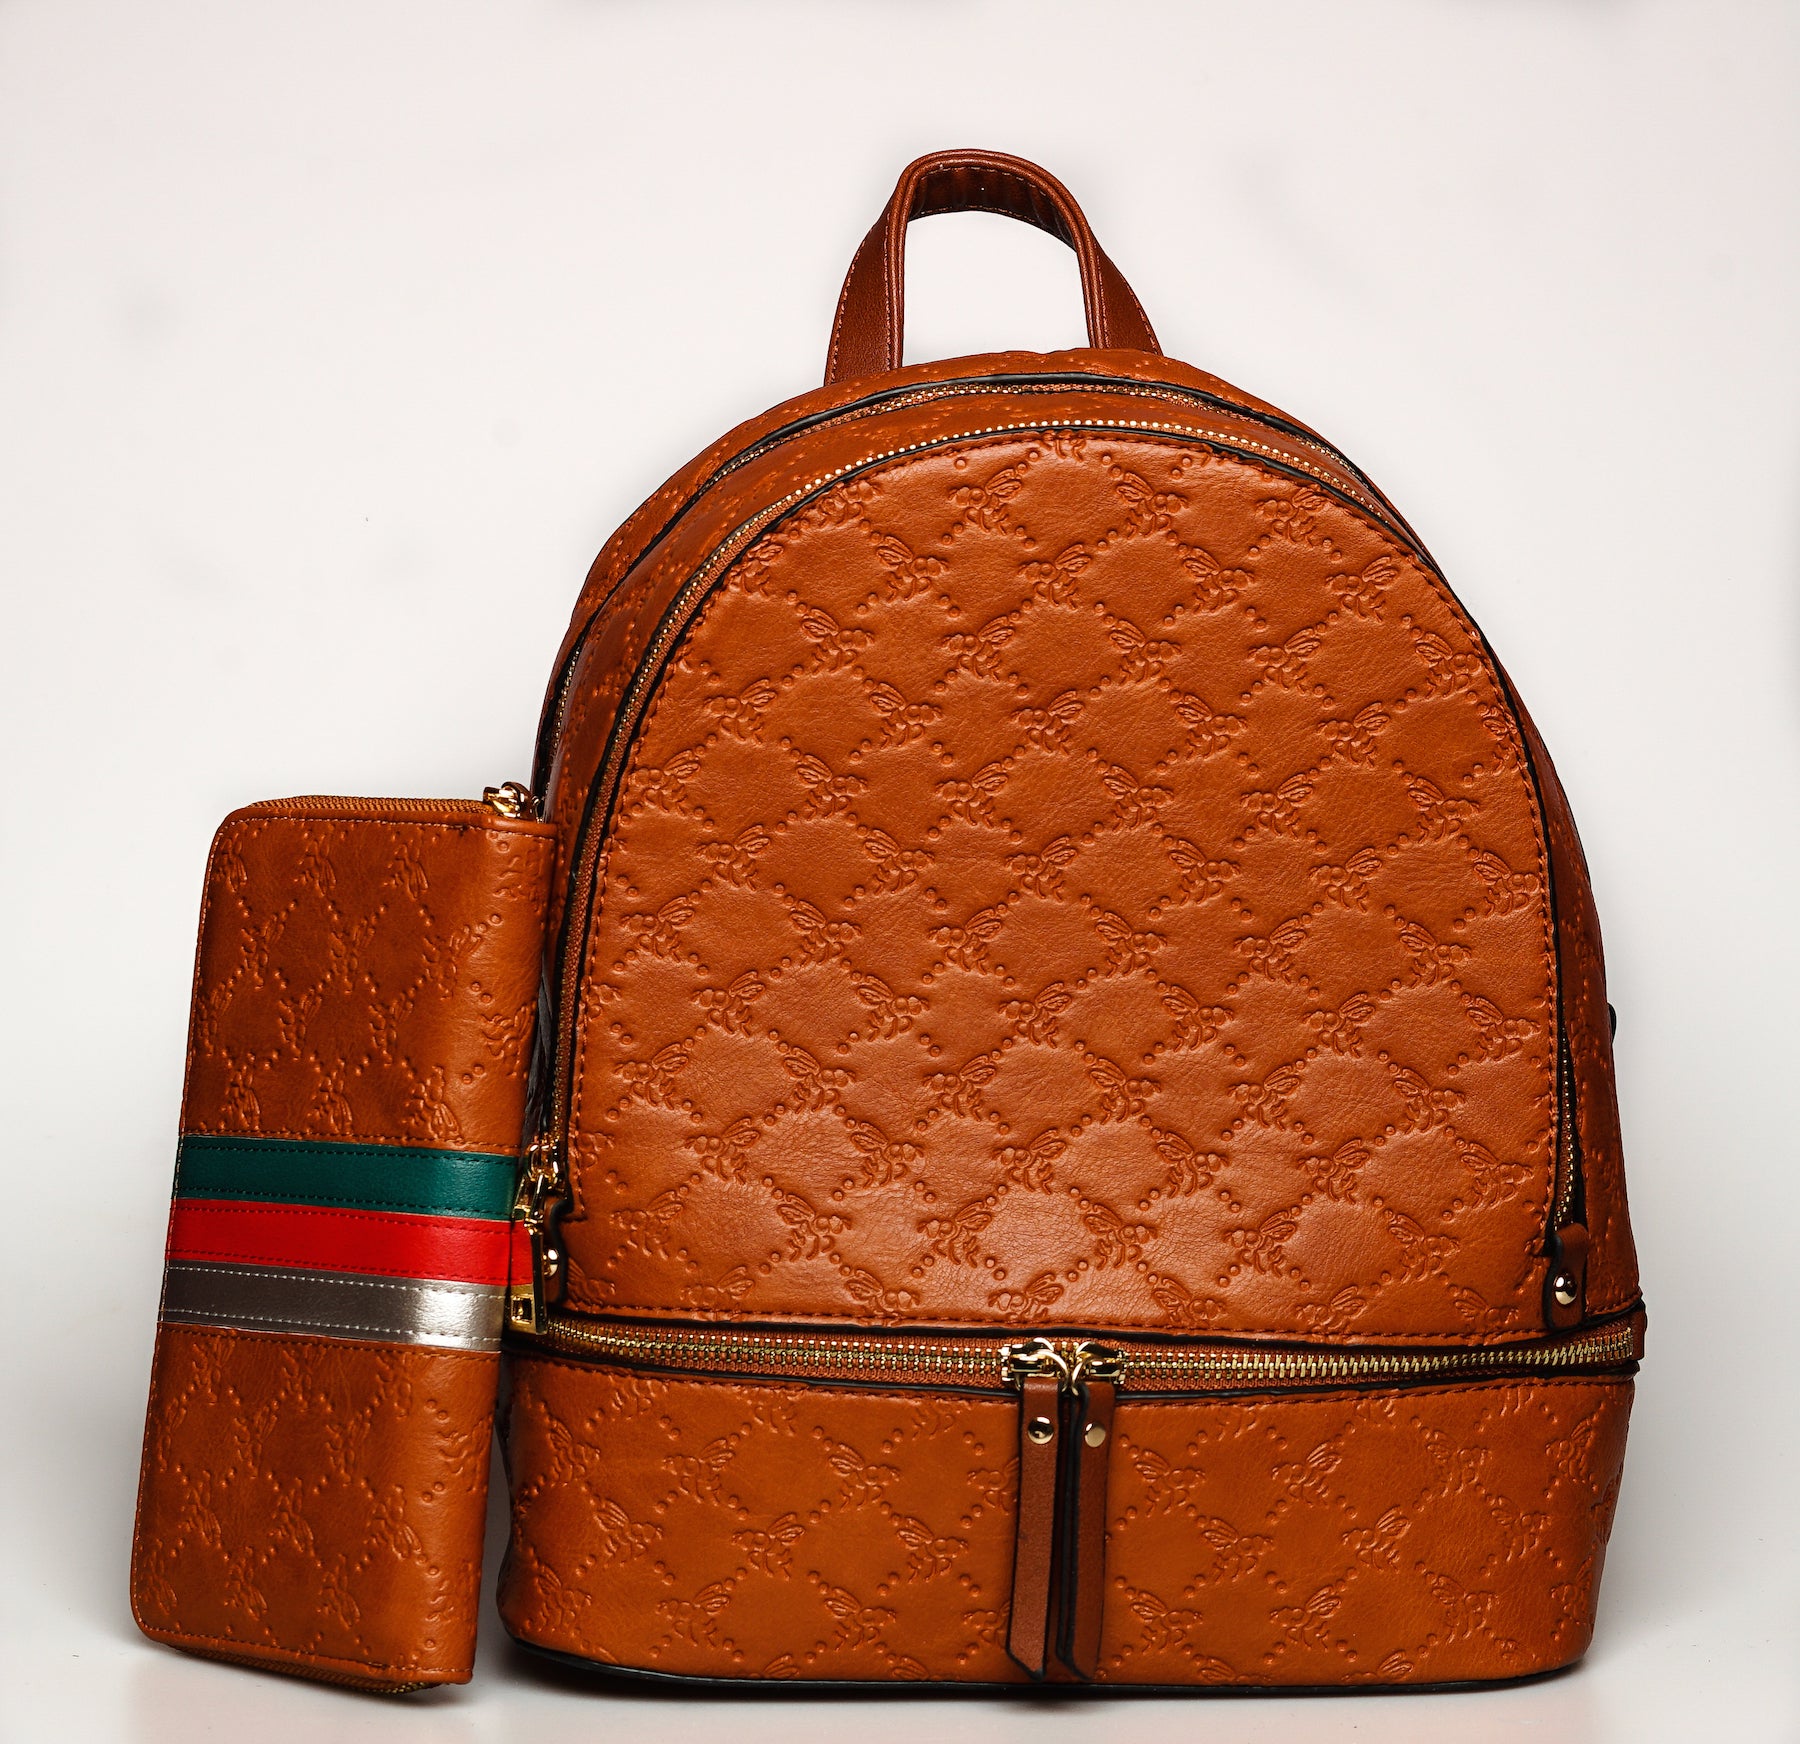 Mini Bee Faux-Leather Backpack Purse | eBay